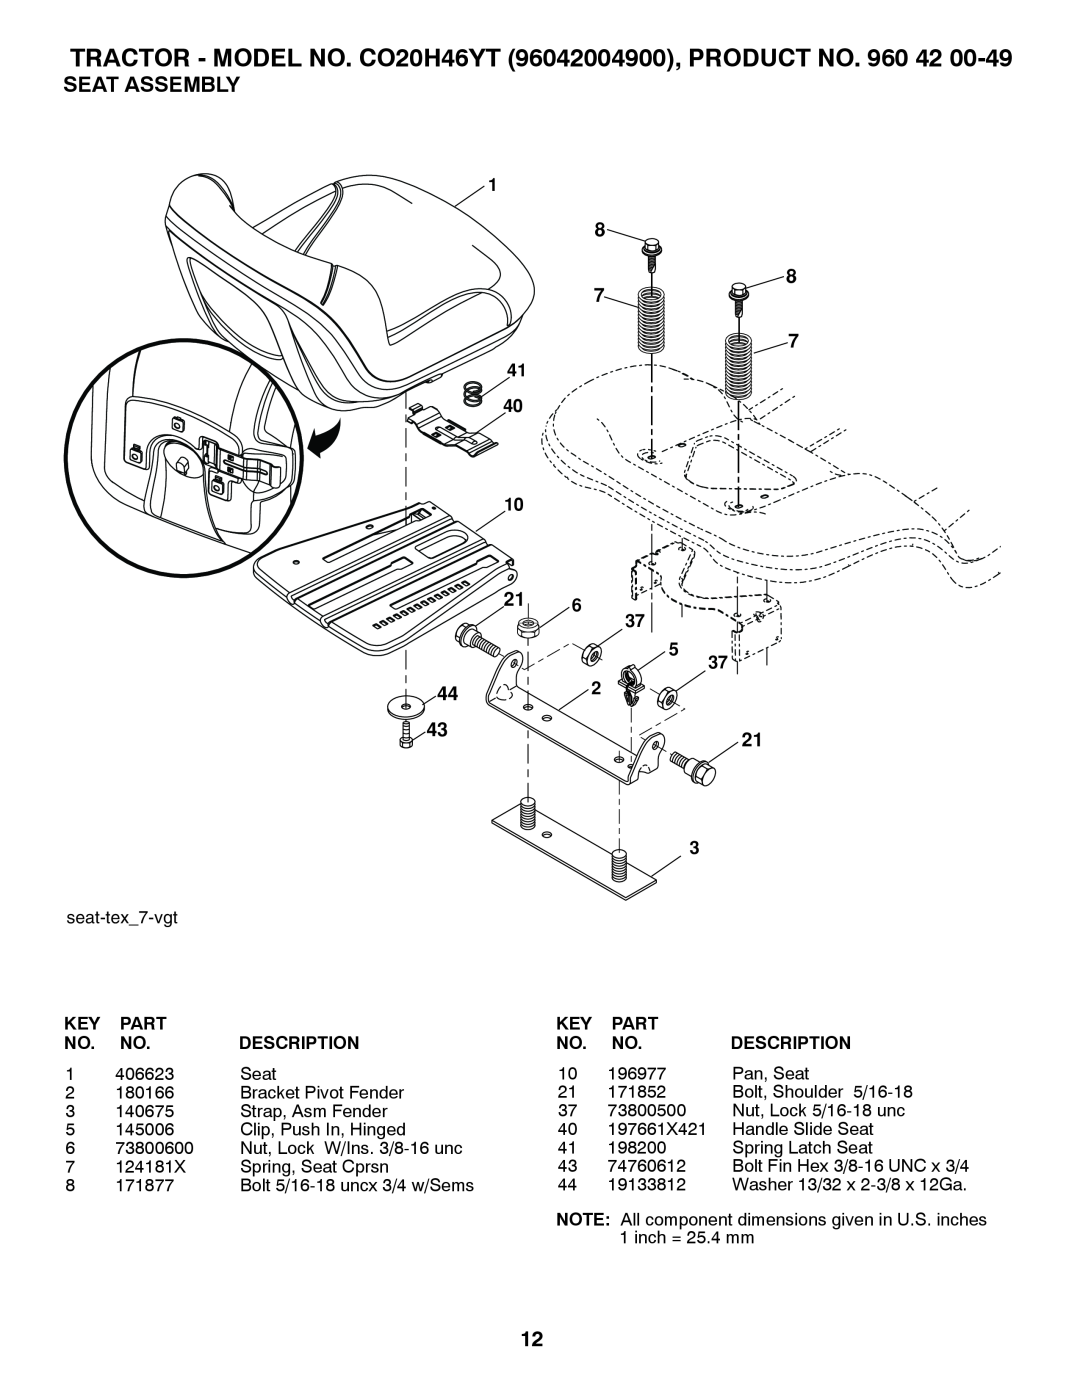 Poulan 412525 manual Seat Assembly, TRACTOR - MODEL NO. CO20H46YT 96042004900, PRODUCT NO. 960 42, Part, Description 